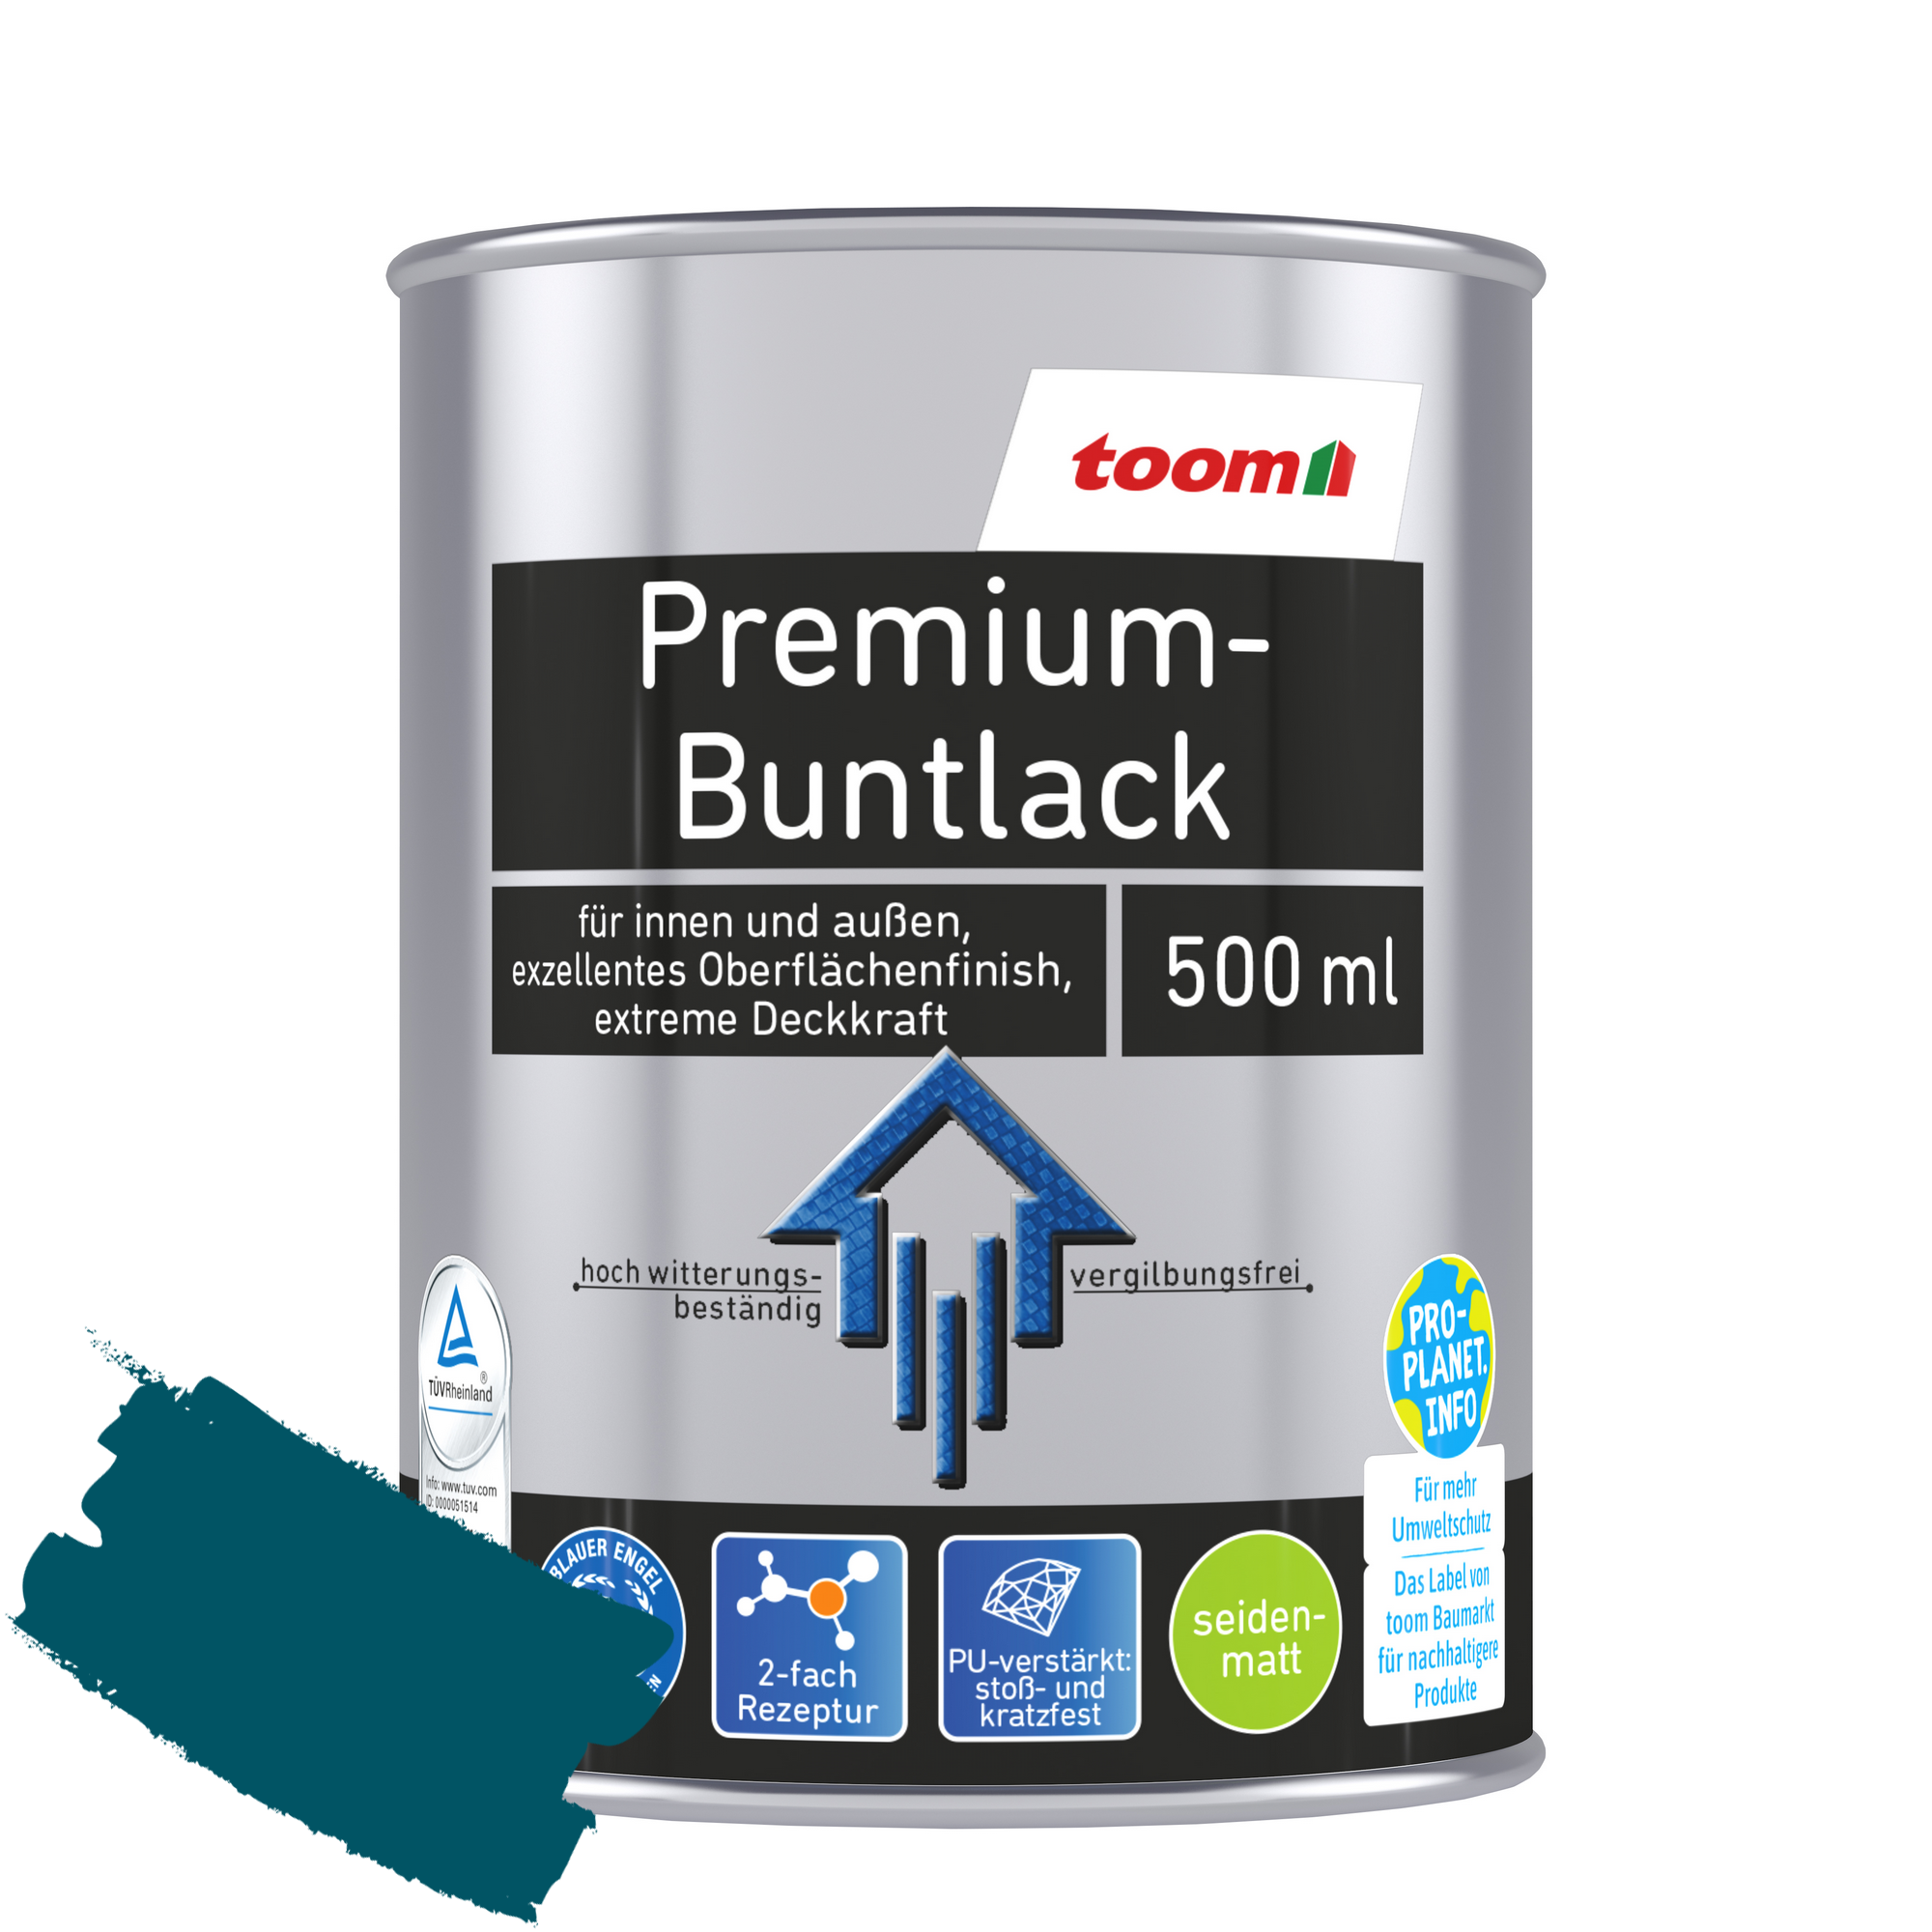 Premium-Buntlack petrolfarben seidenmatt 500 ml + product picture